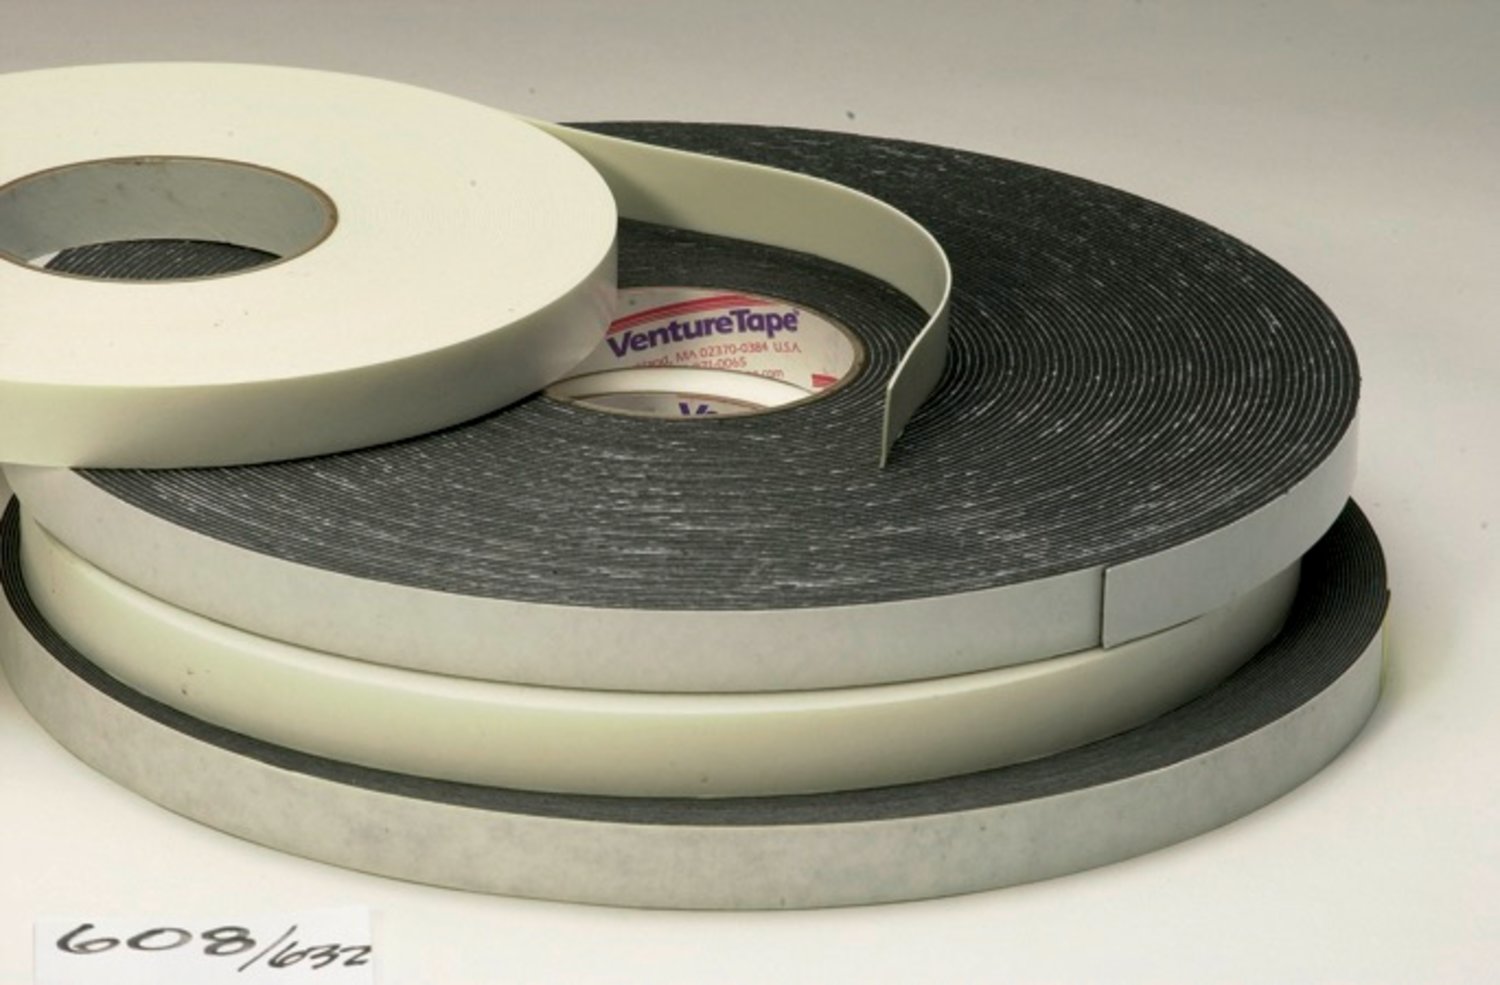 7010379962 - 3M Venture Tape Double Sided Polyethylene Foam Glazing Tape VG1216,
White, 1/2 in x 150 ft, 62 mil, 40 rolls per case